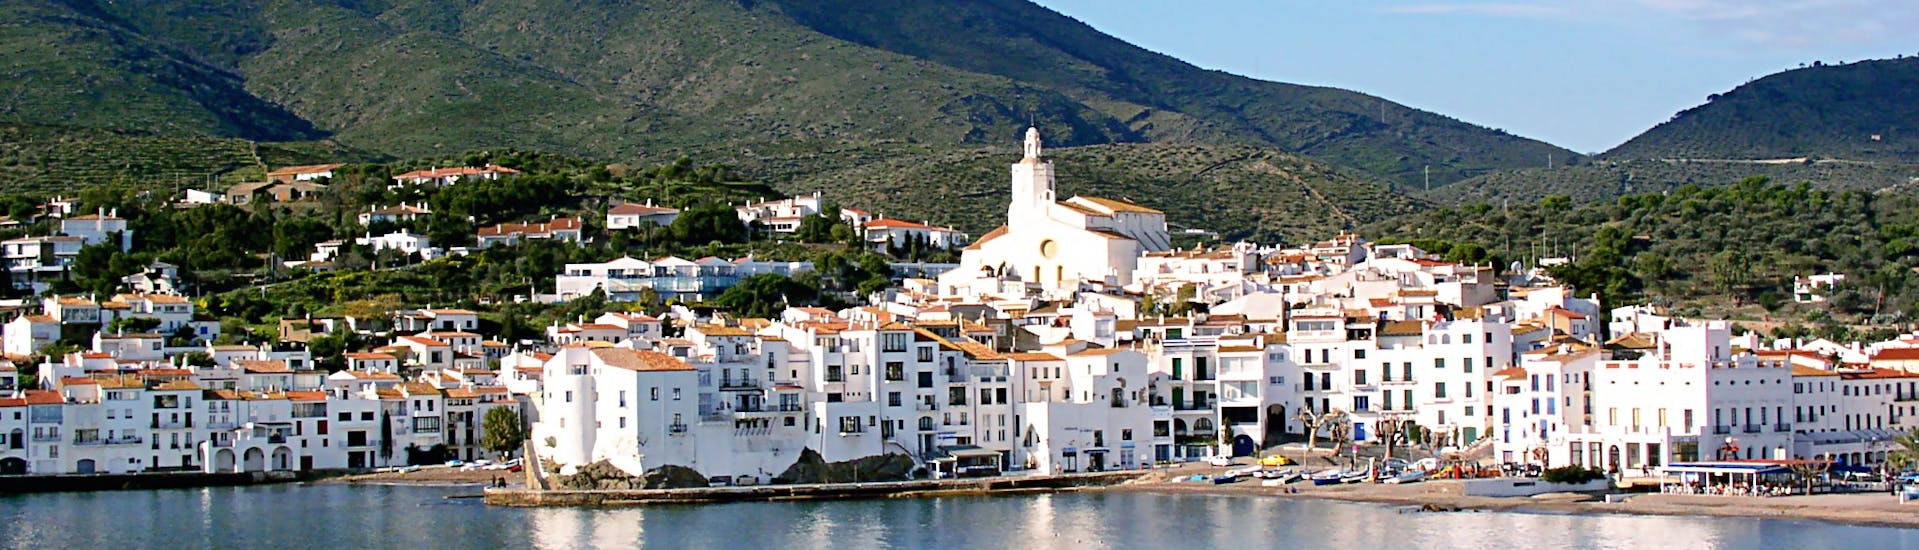 View of Cadaqués during a Boat Trip to Cadaqués and Cap de Creus' Natural Park with Don Pancho.